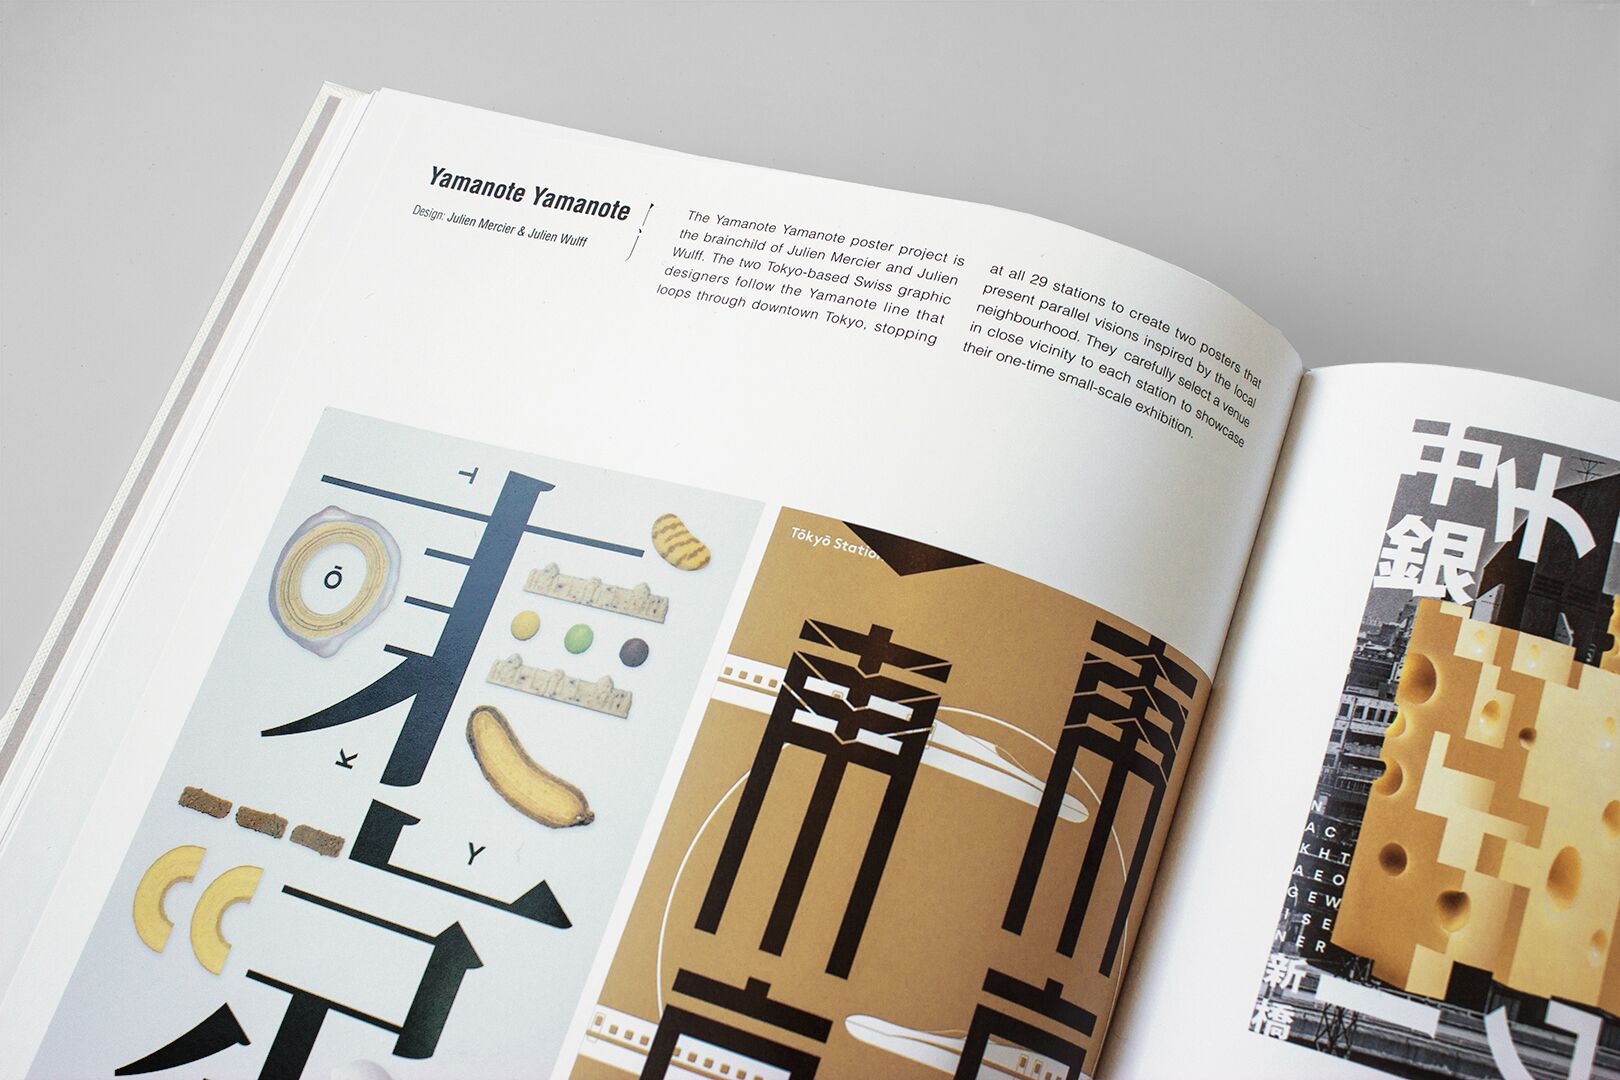 Sandu Publishing Asian Typography HongKong Asia swiss graphic design japan design YamanoteYamanote